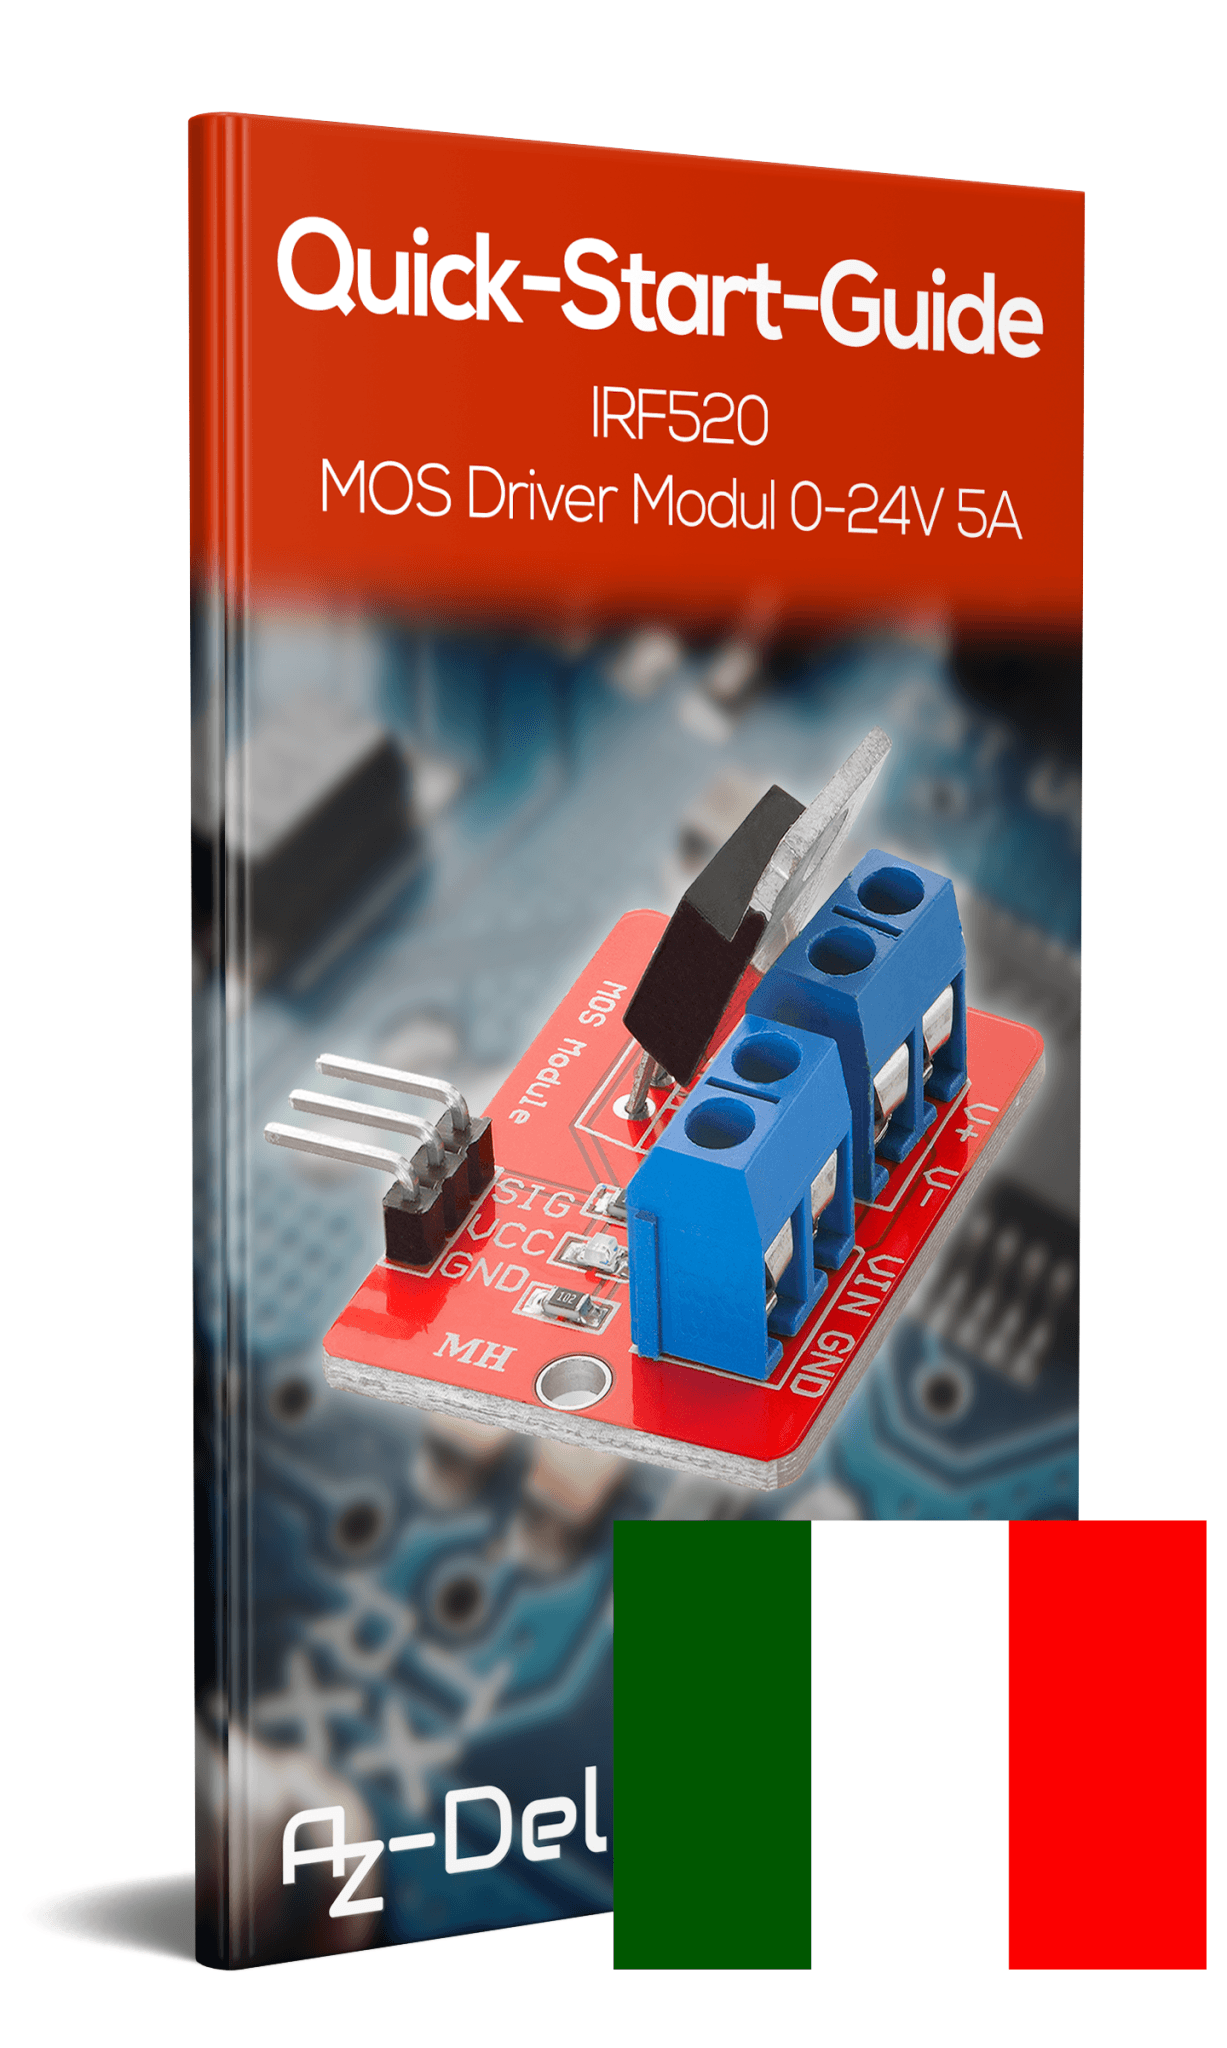 IRF520 MOS Driver Modul 0-24V 5A - AZ-Delivery